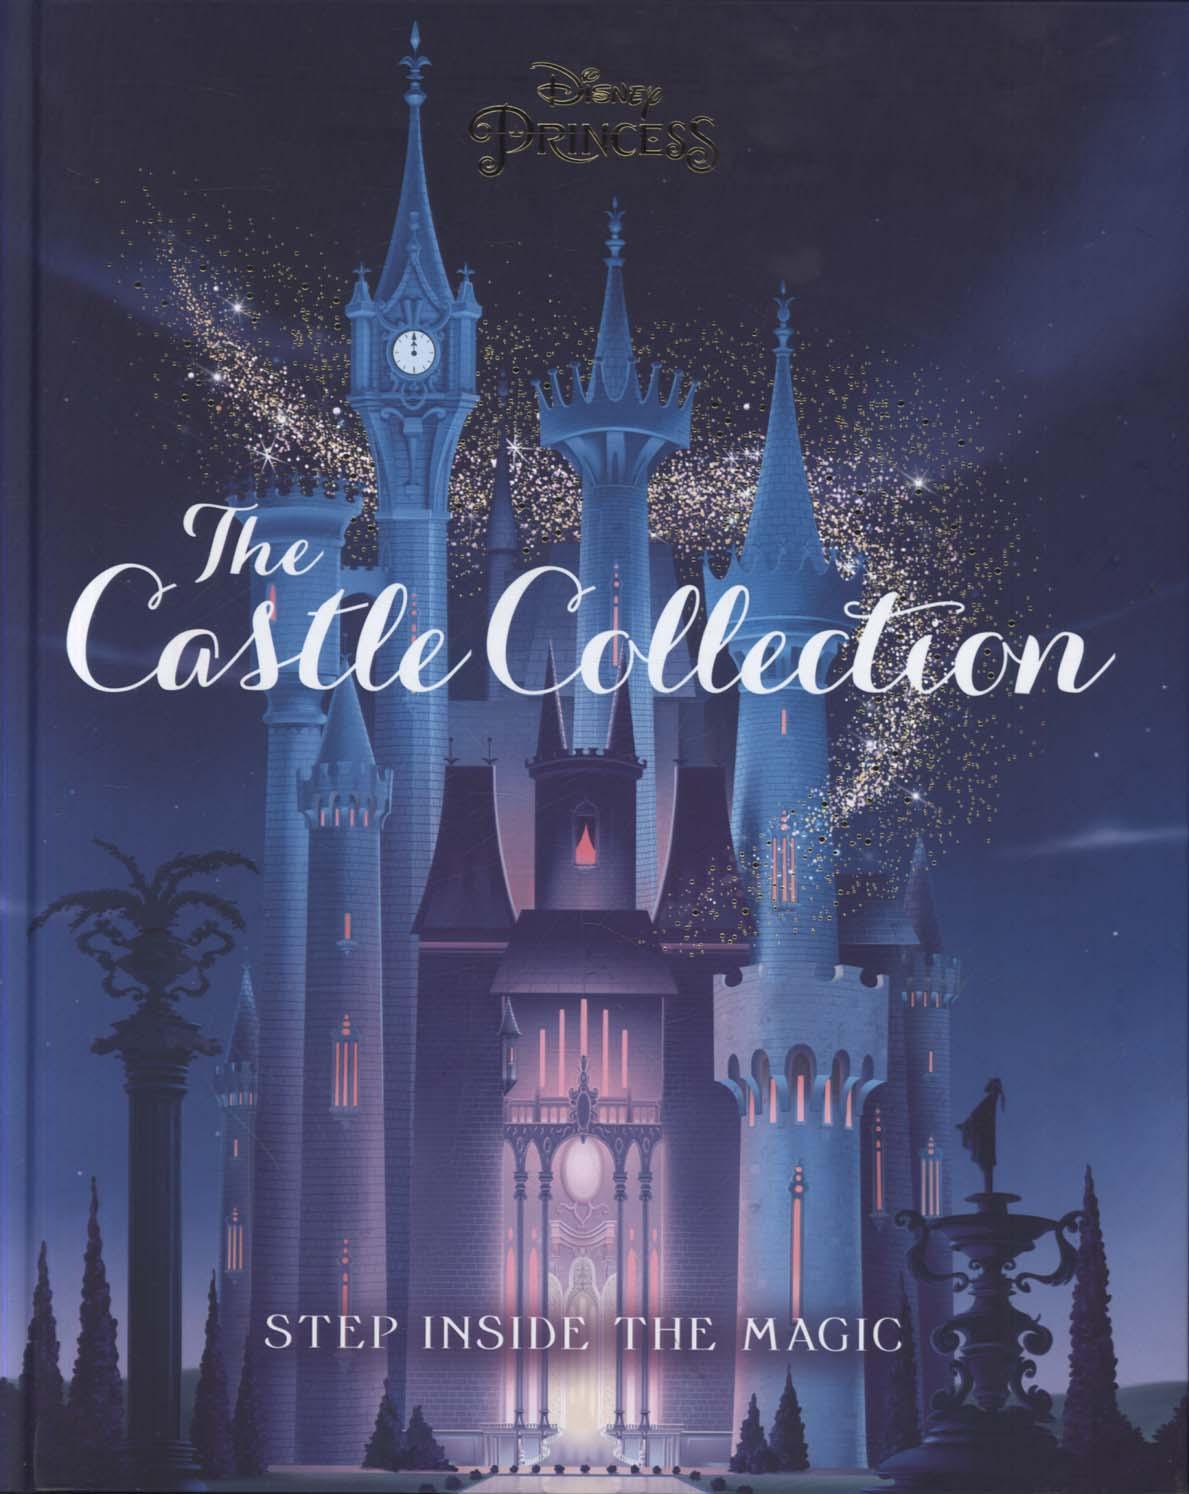 Disney Princesses: The Castle Collection